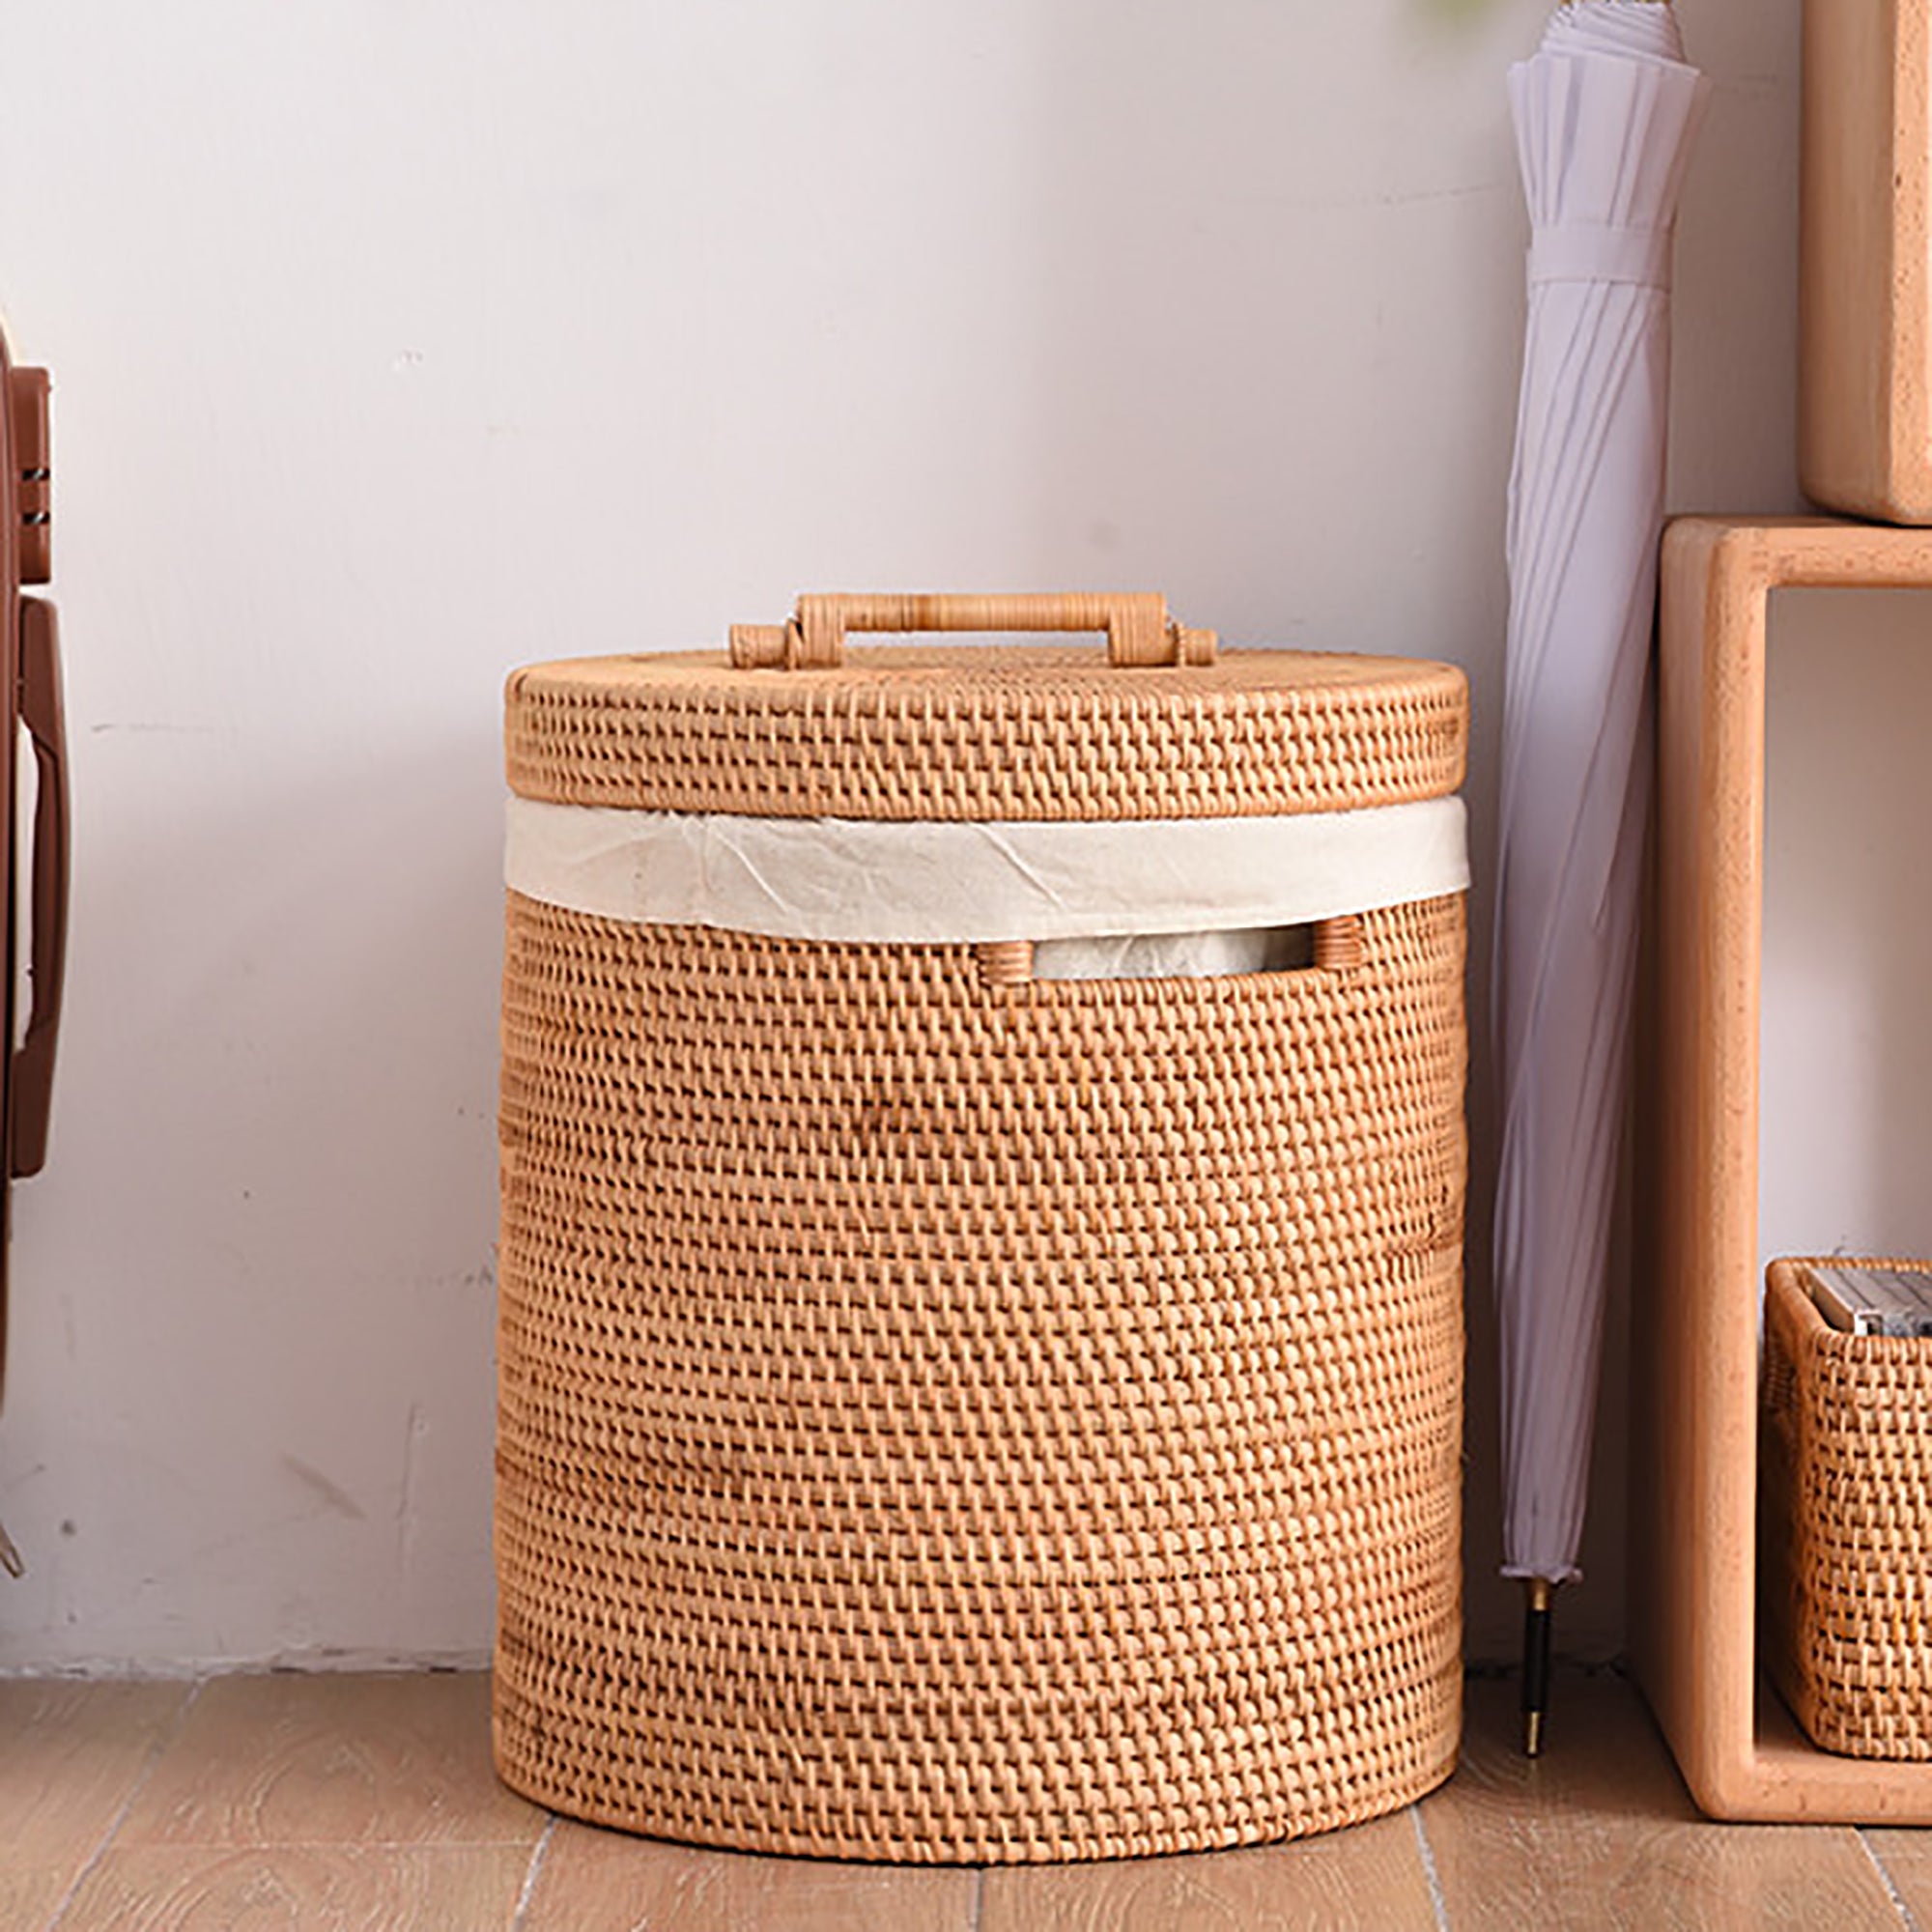 Complete Home Storage Basket - Each